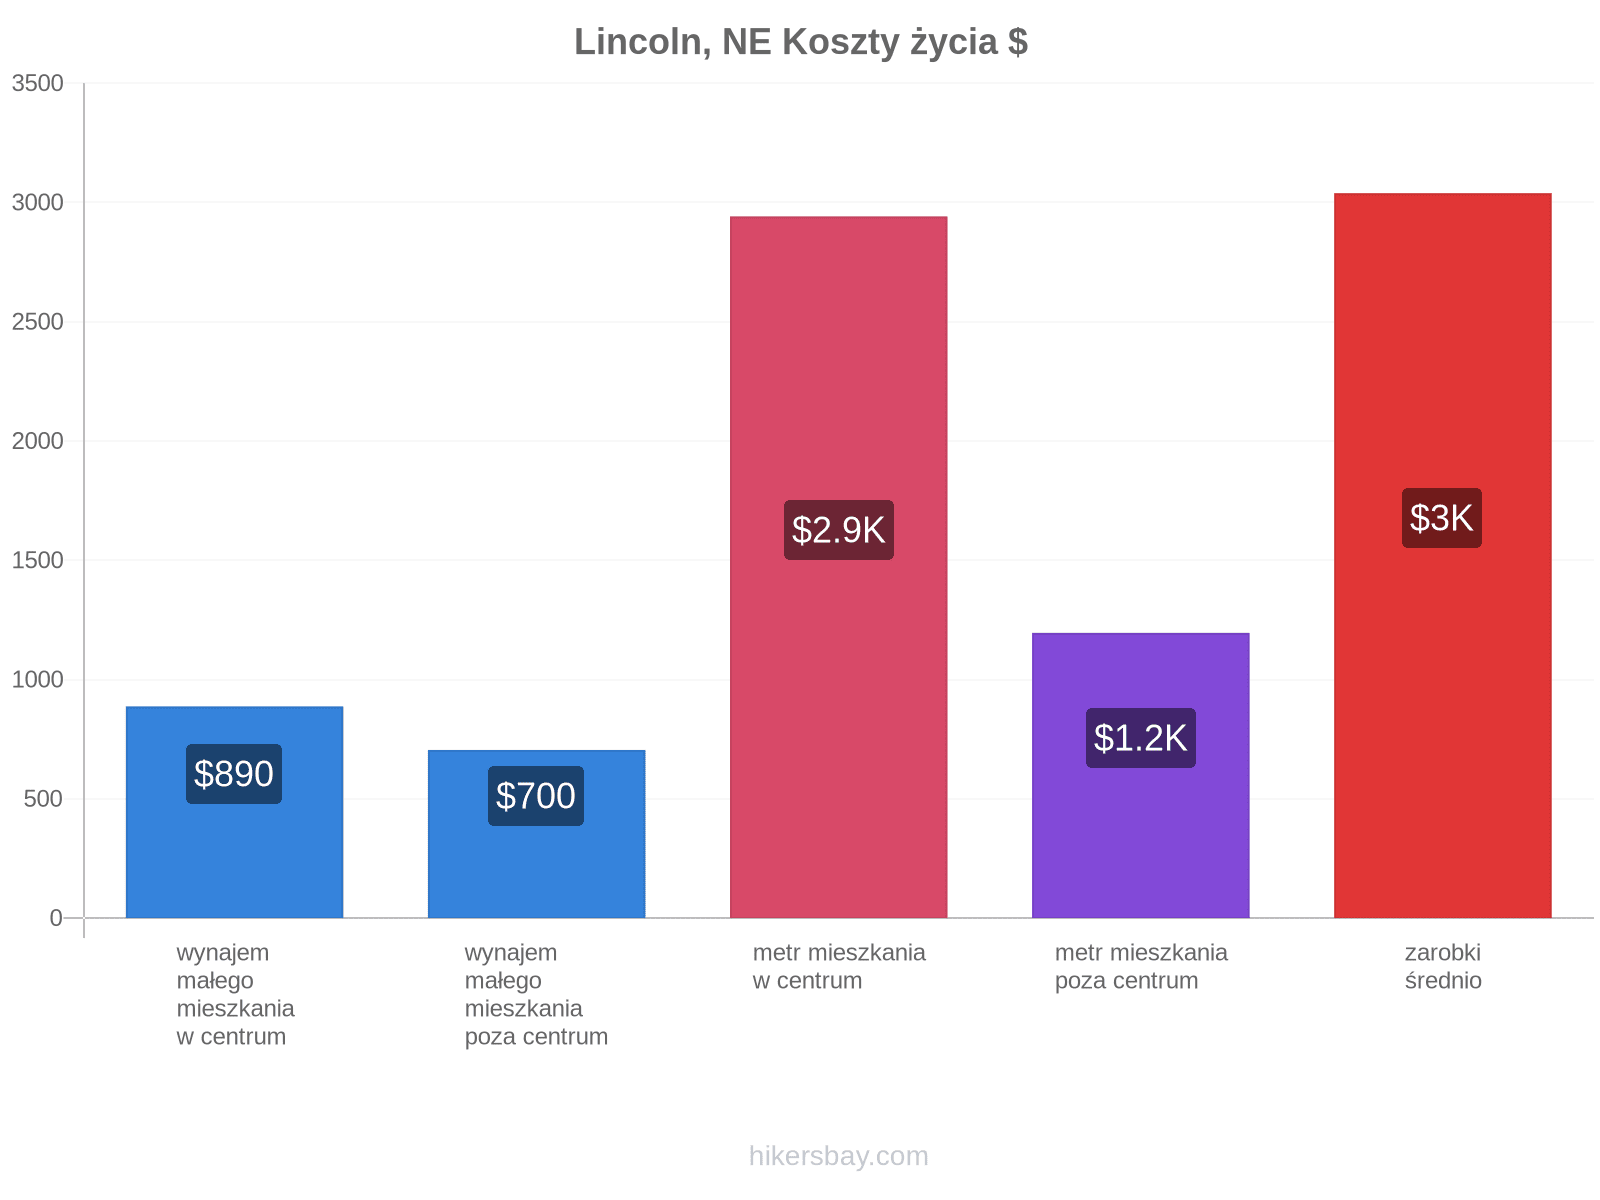 Lincoln, NE koszty życia hikersbay.com